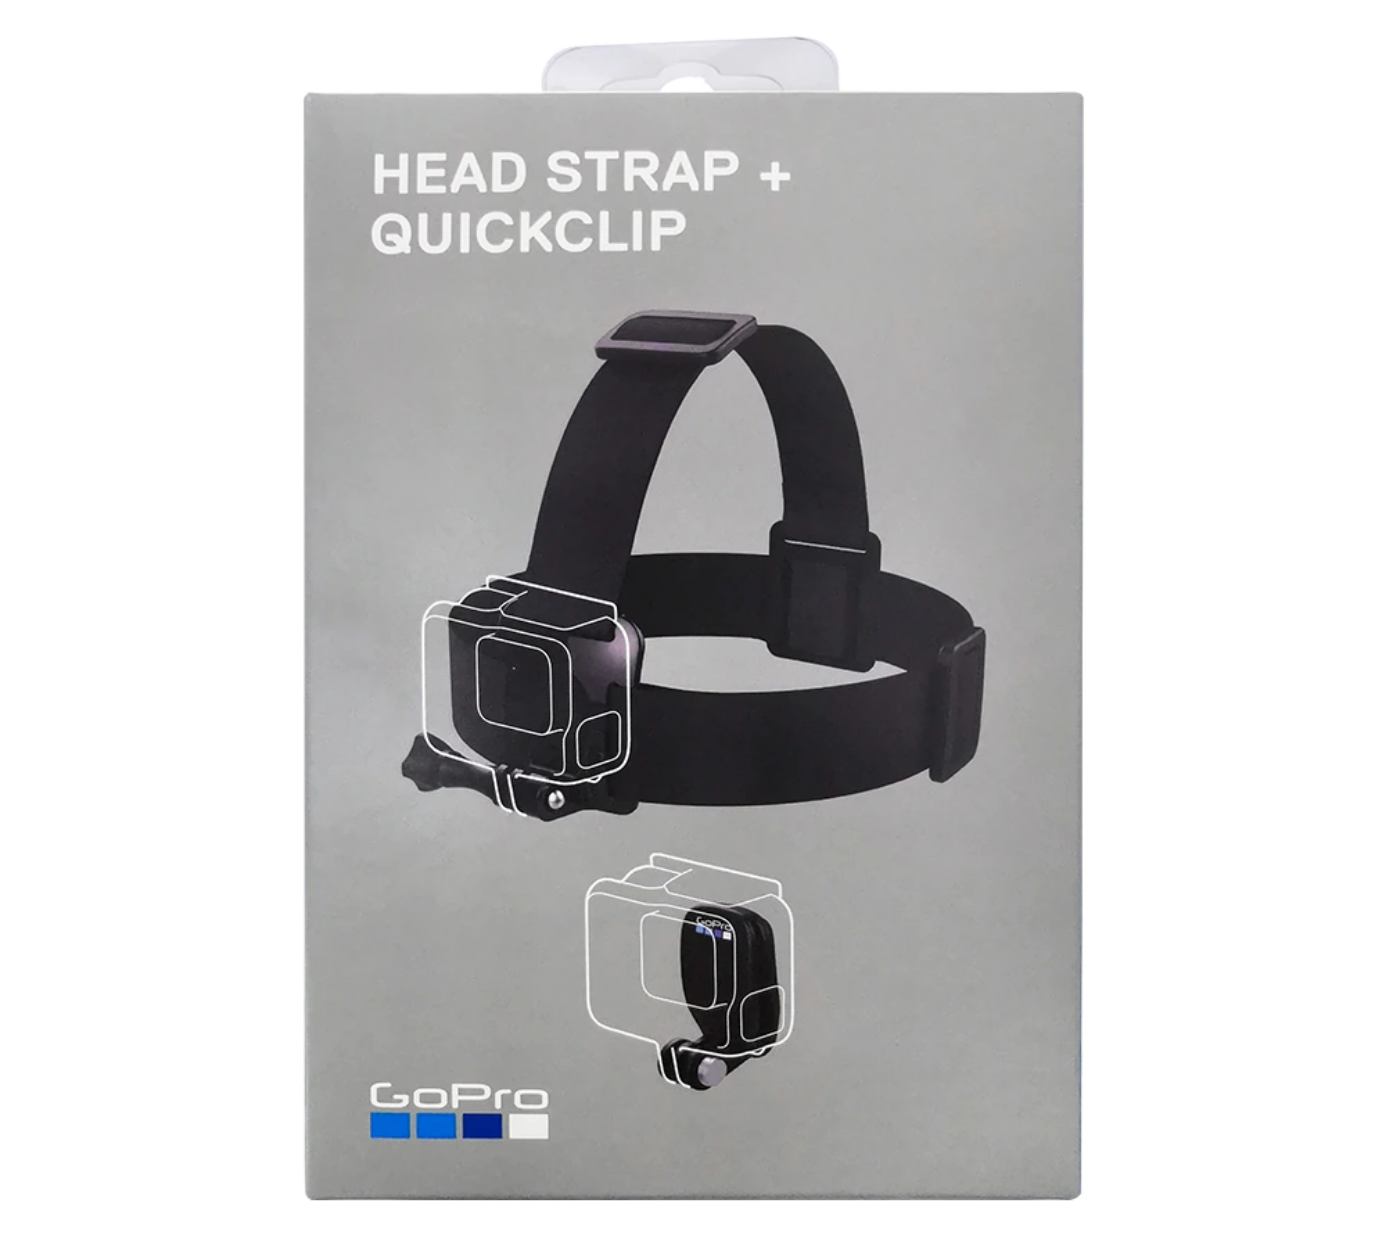 GOPRO Head Strap + QuickClip